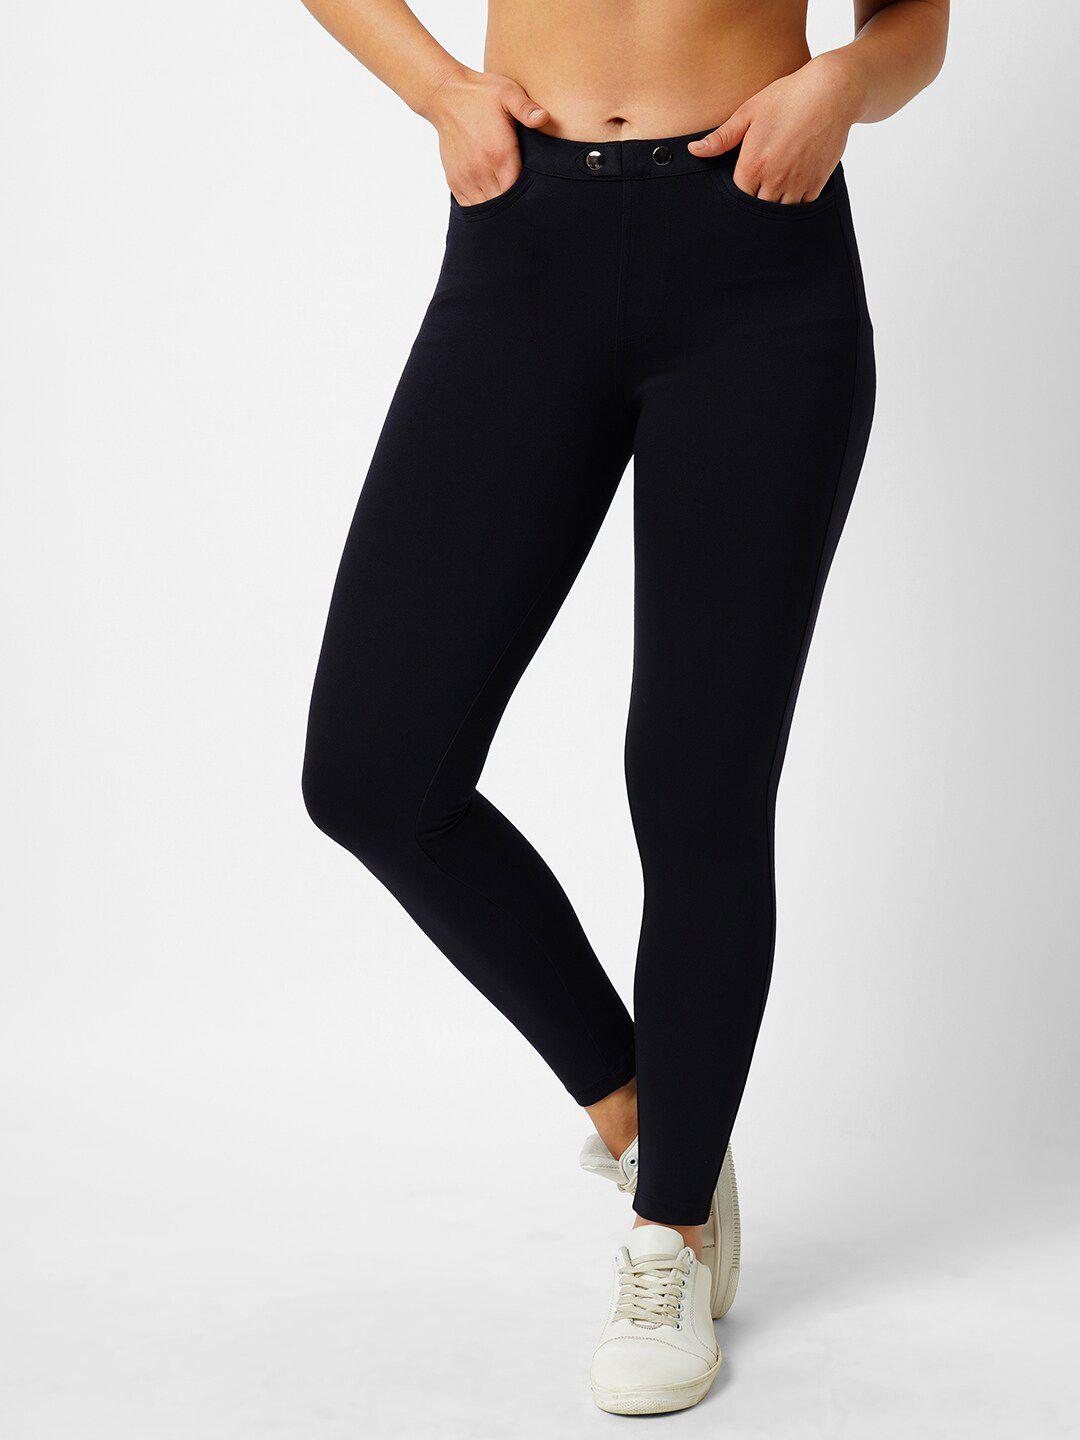 kraus-jeans-women-skinny-fit-treggings